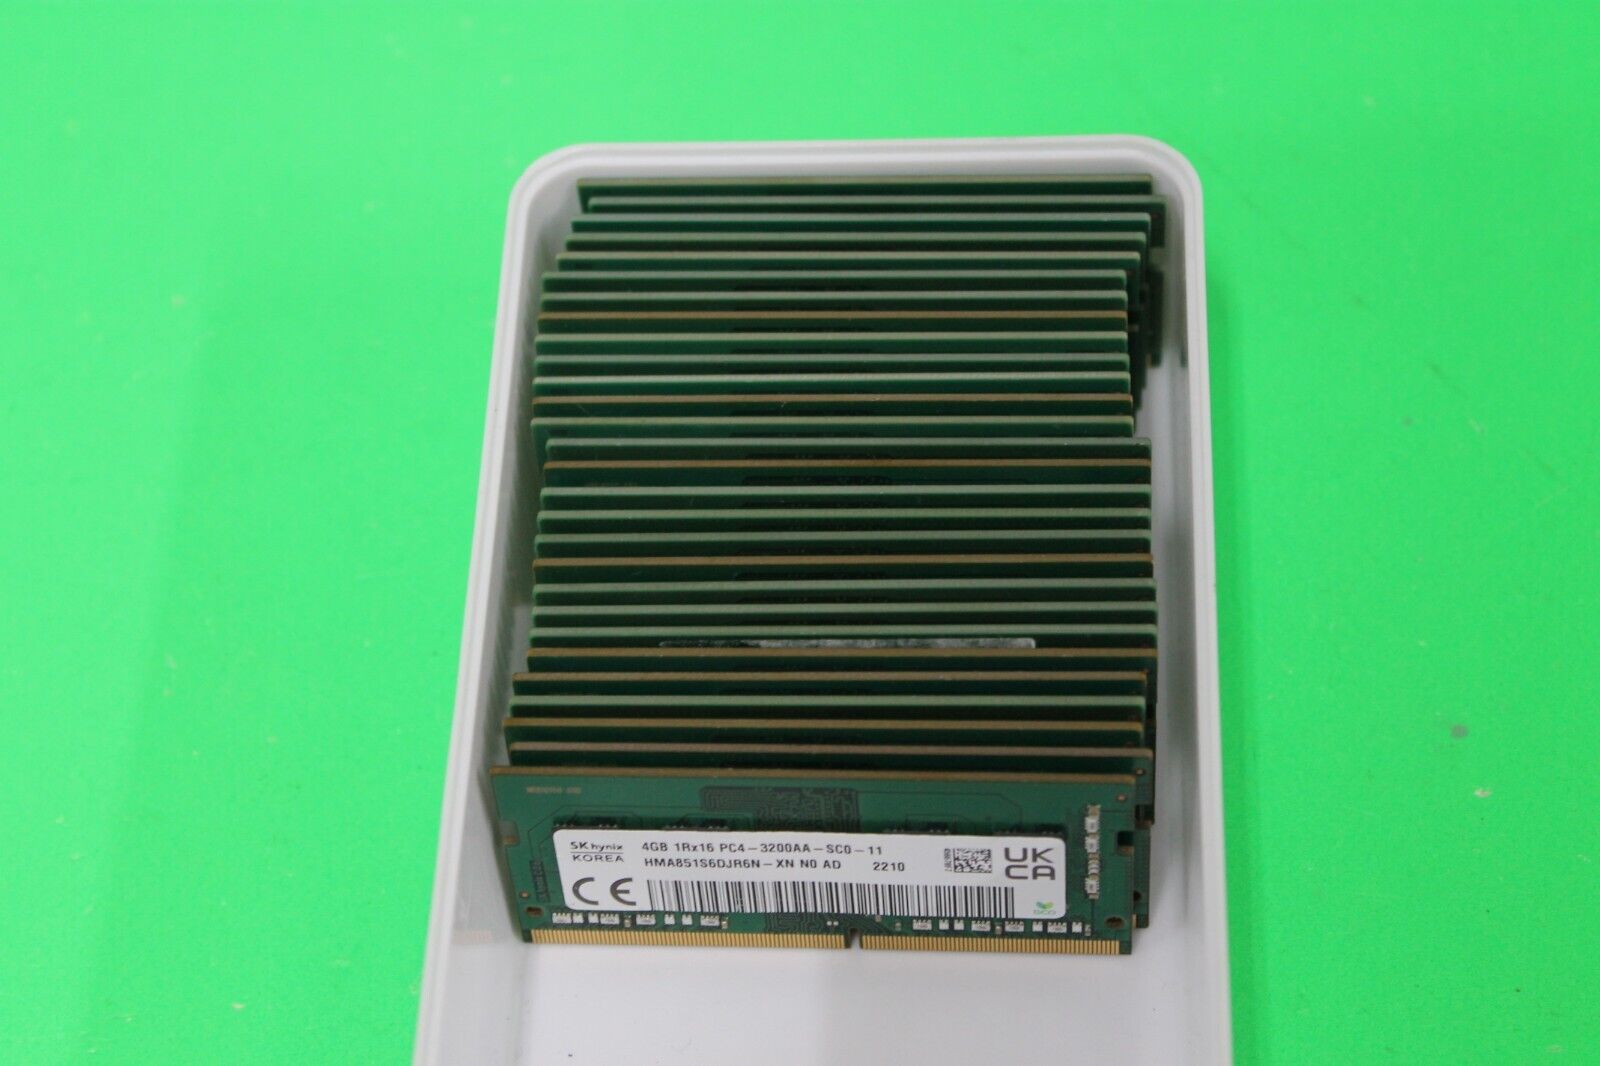 LOT OF 28 SK HYNIX 4GB 1Rx16 PC4-3200 DDR4 SODIMM Laptop Memory HMA851S6DJR6N-XN